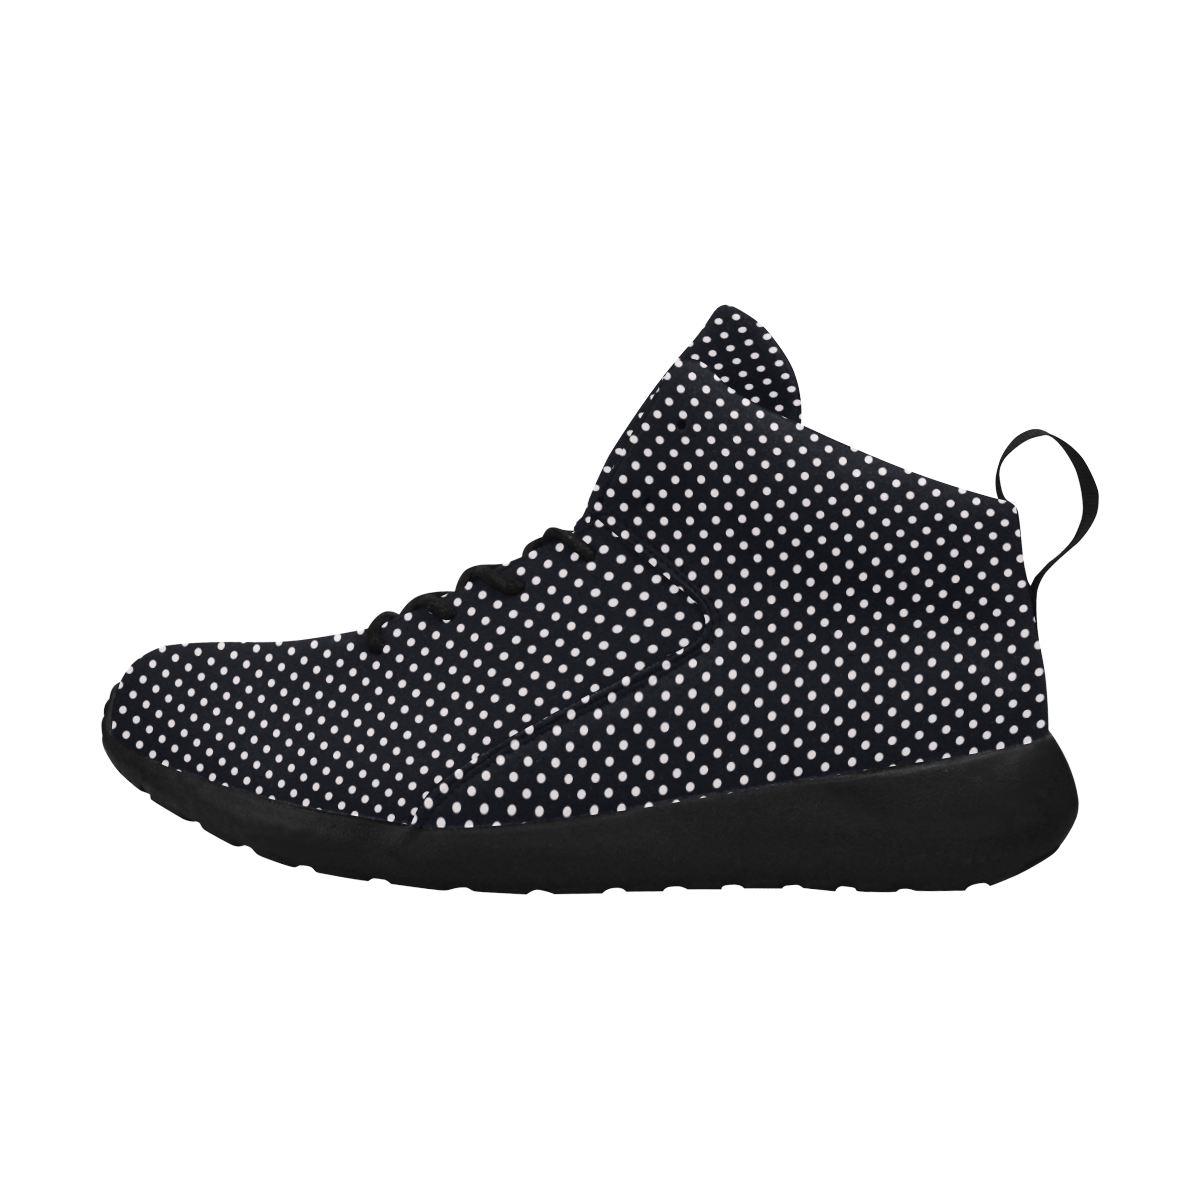 Black polka dots Women's Chukka Training Shoes (Model 57502)